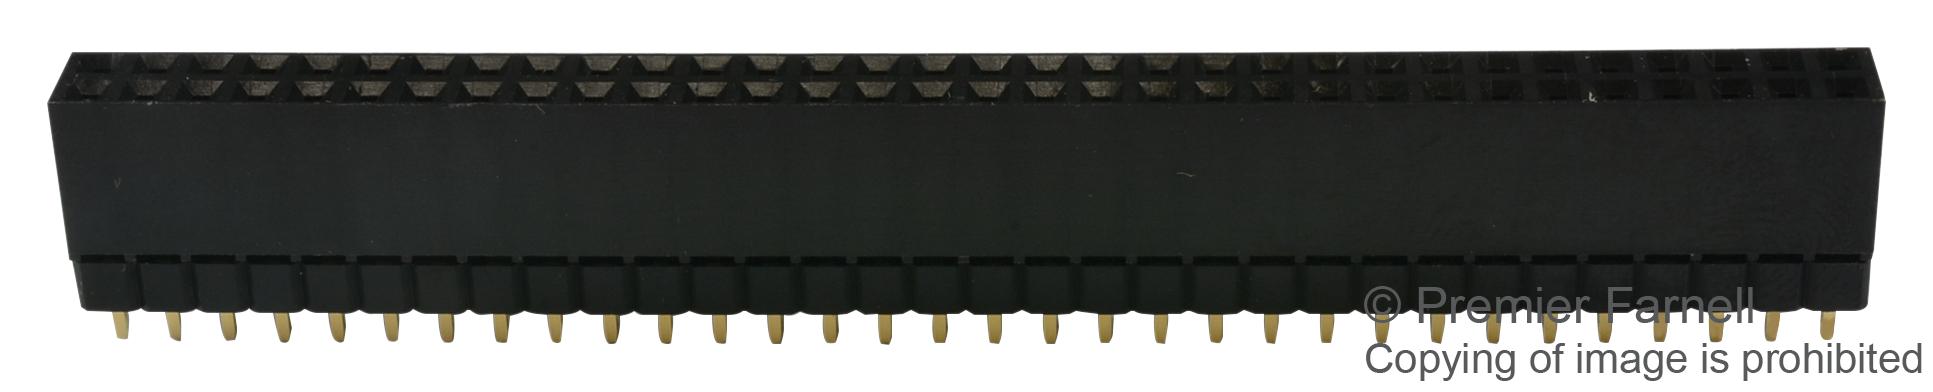 M20-6113245 SOCKET, PC/104, 64WAY HARWIN